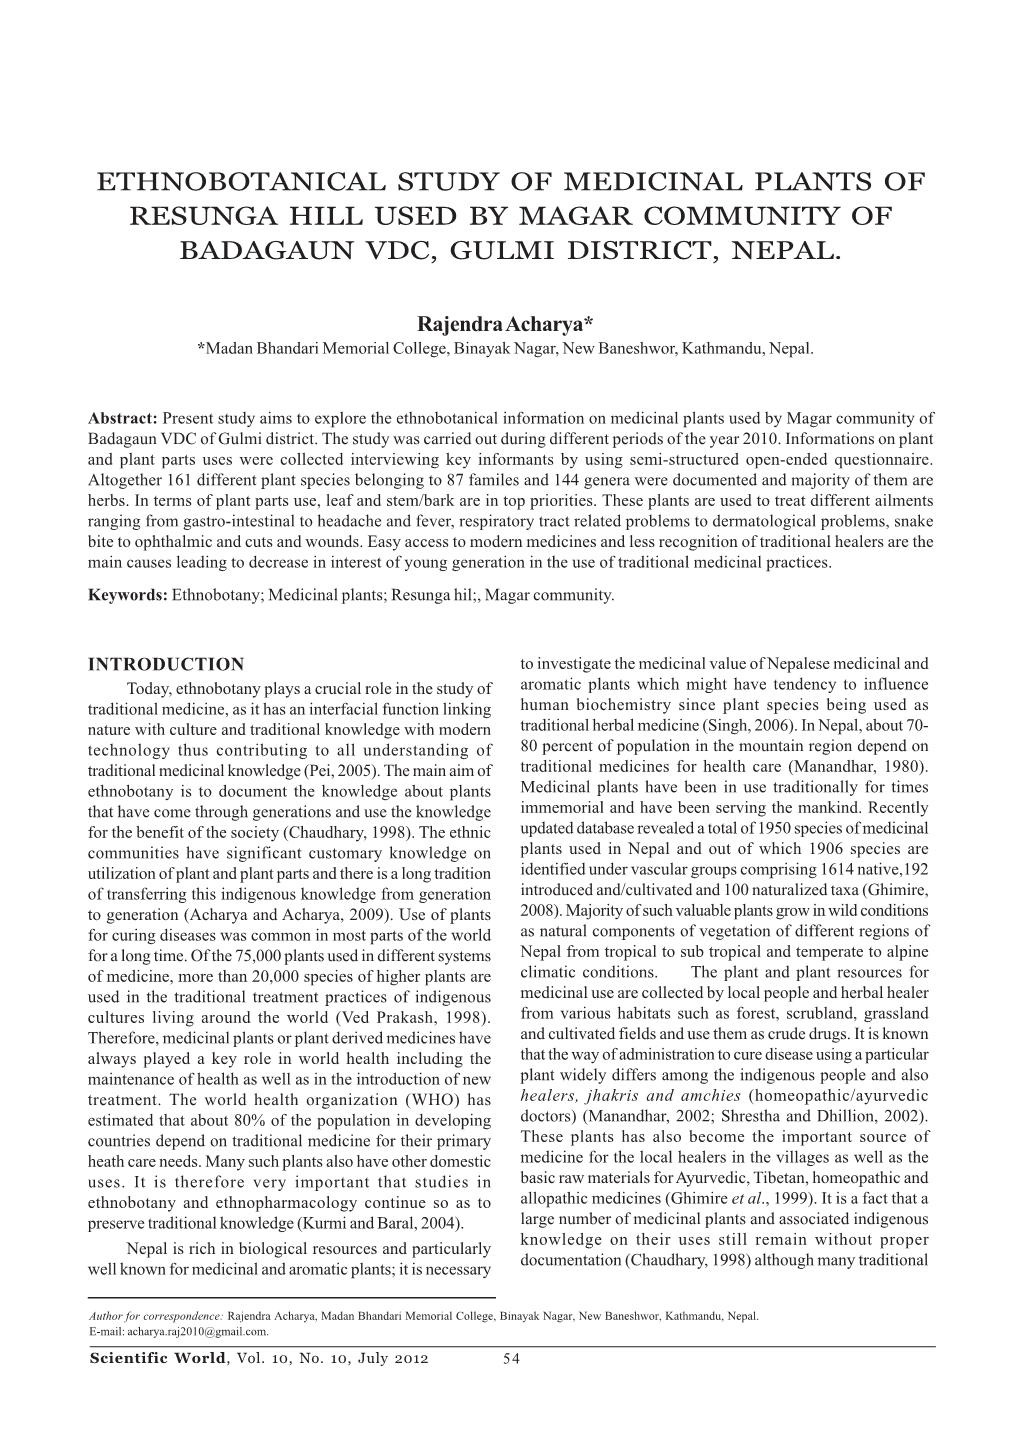 Ethnobotanical Study of Medicinal Plants of Resunga Hill Used by Magar Community of Badagaun Vdc, Gulmi District, Nepal